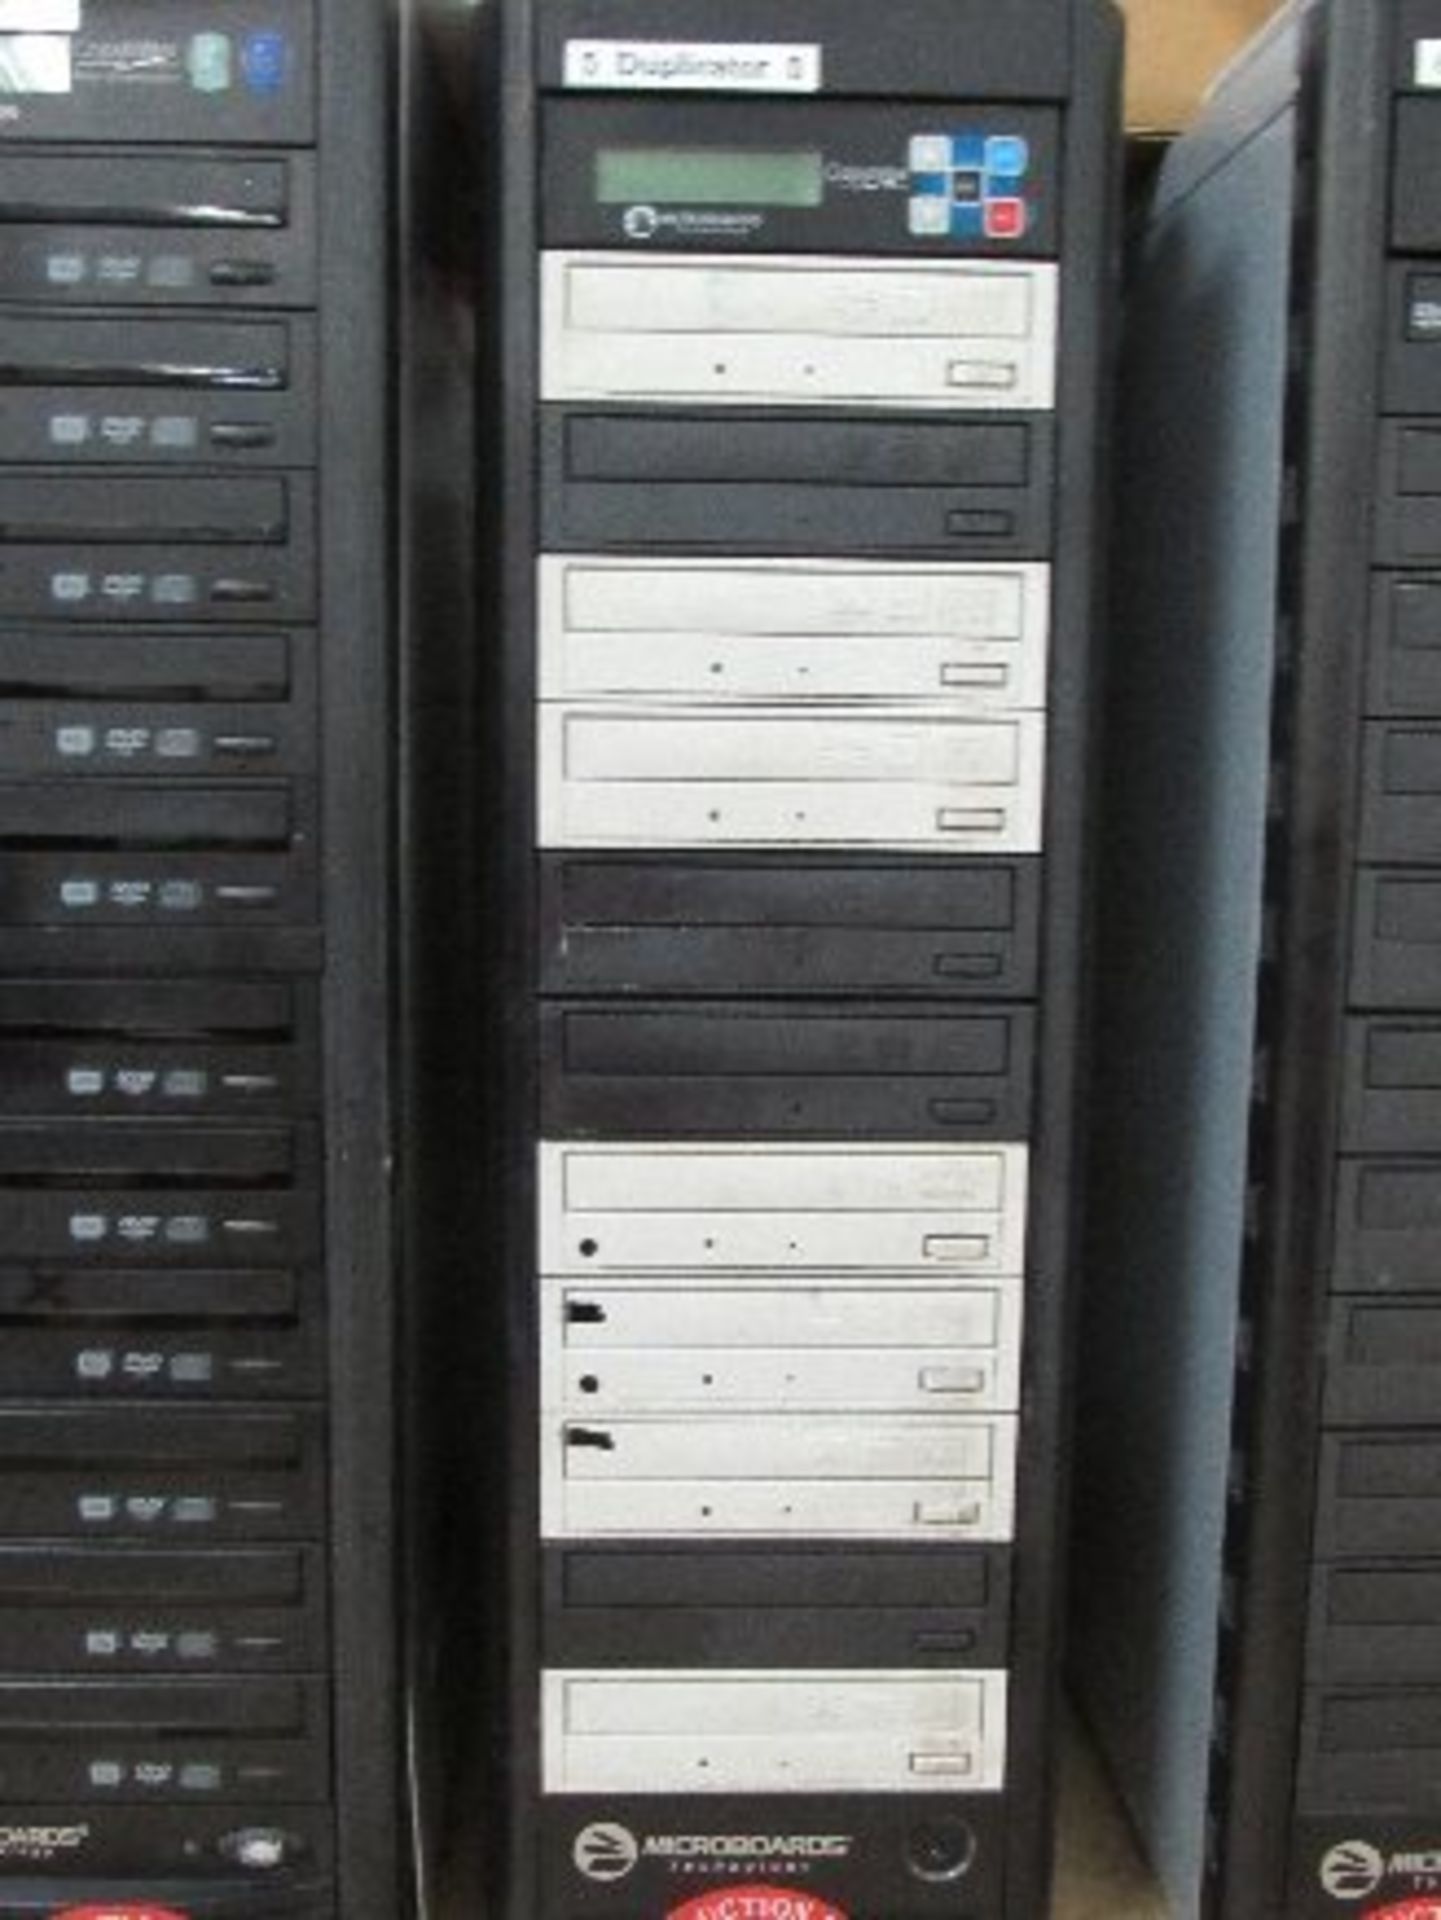 Micro Boards Technology Copy Writer 10 Disk DVD Duplicator